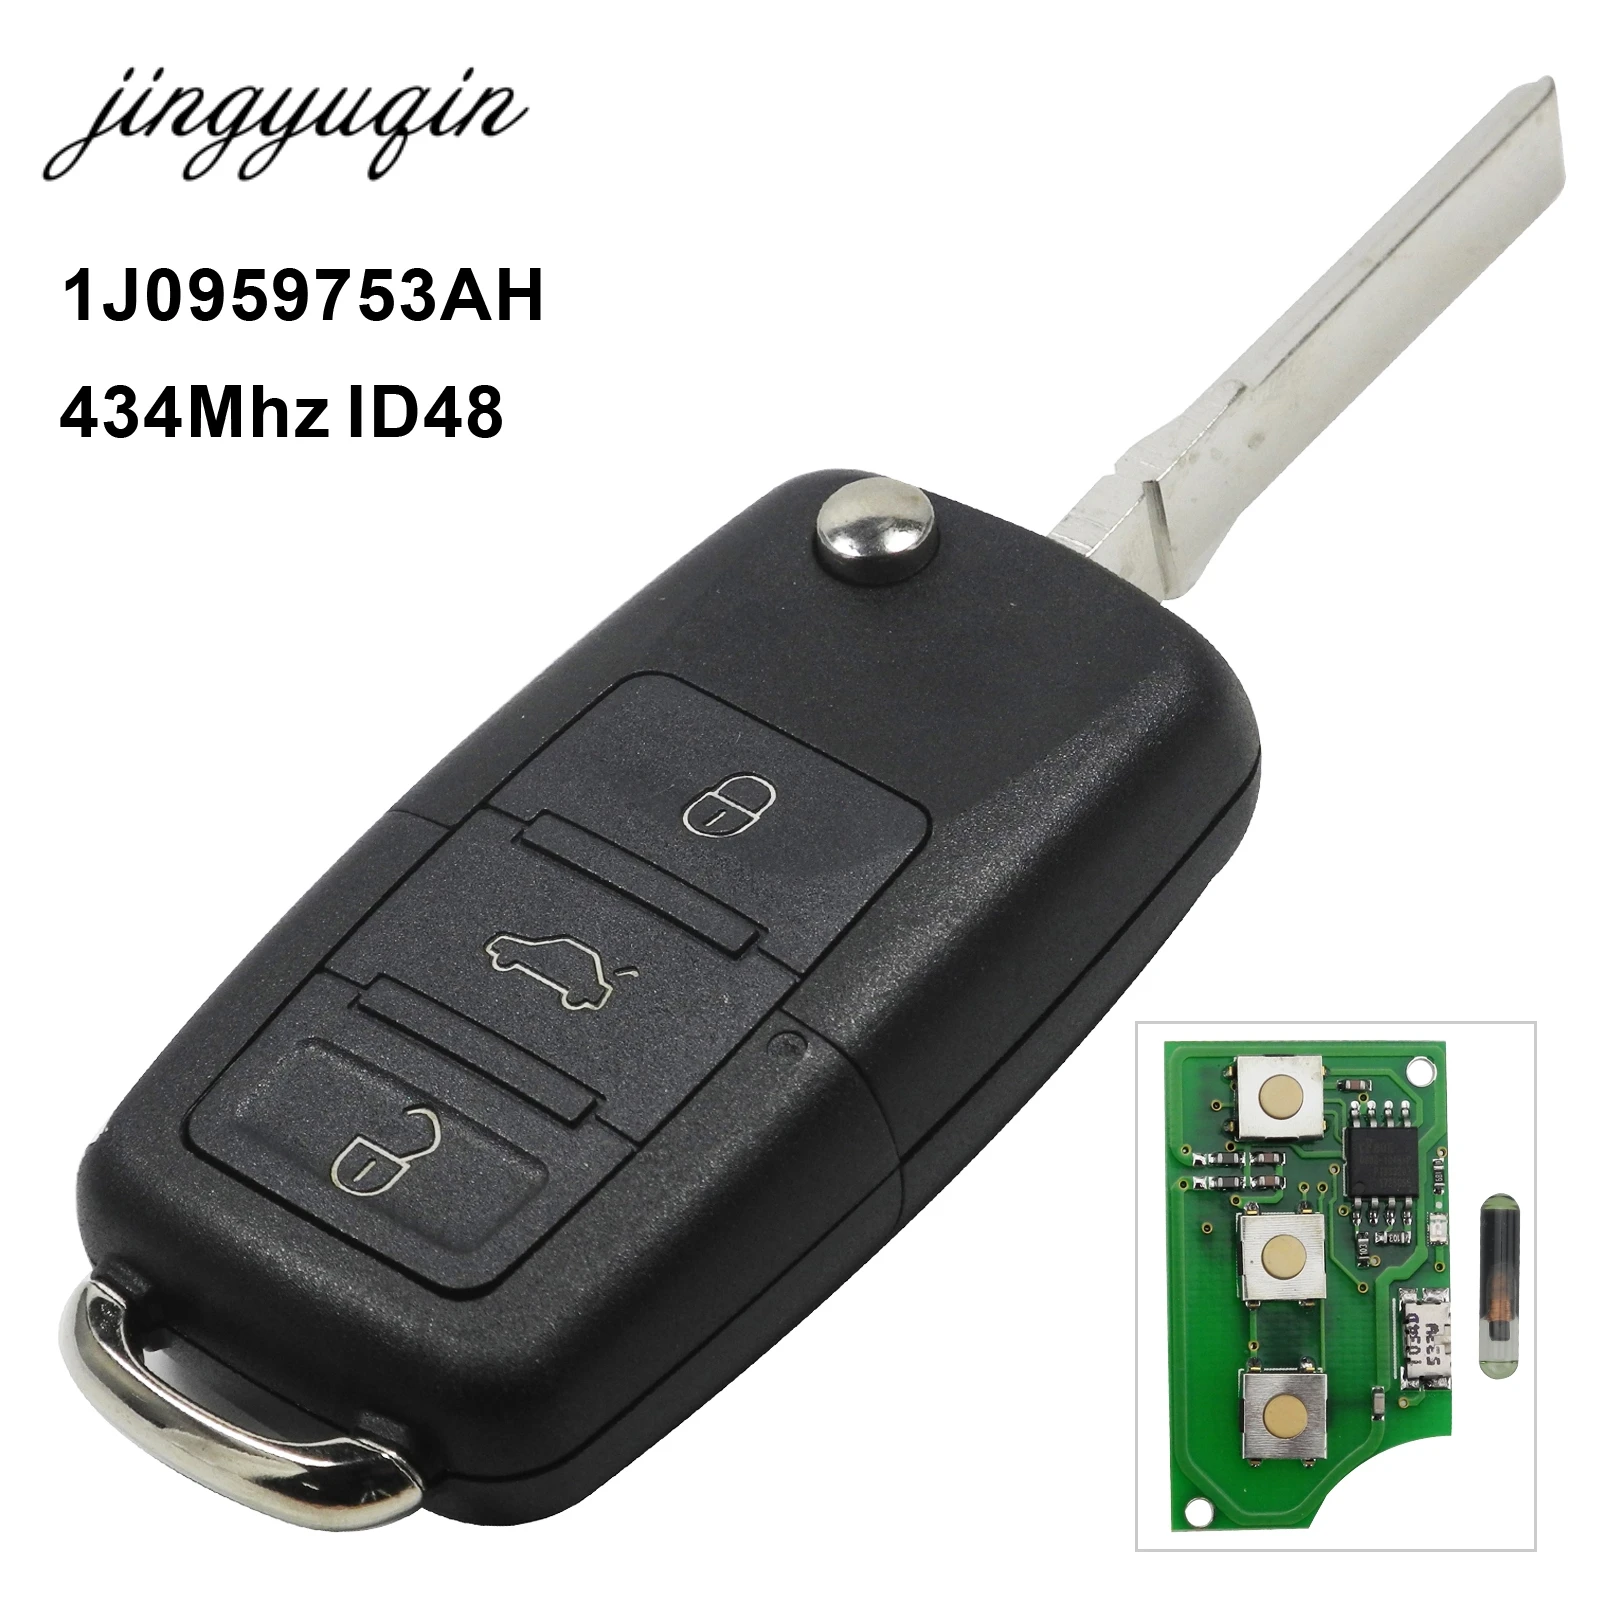 Jingyuqin 10X Автомобильный Дистанционный ключ ID48 для 1J0959753 DA/AH/G для Caddy EOS Jetta Sirocco Tiguantouran Passat Bora Polo Golf Beetle